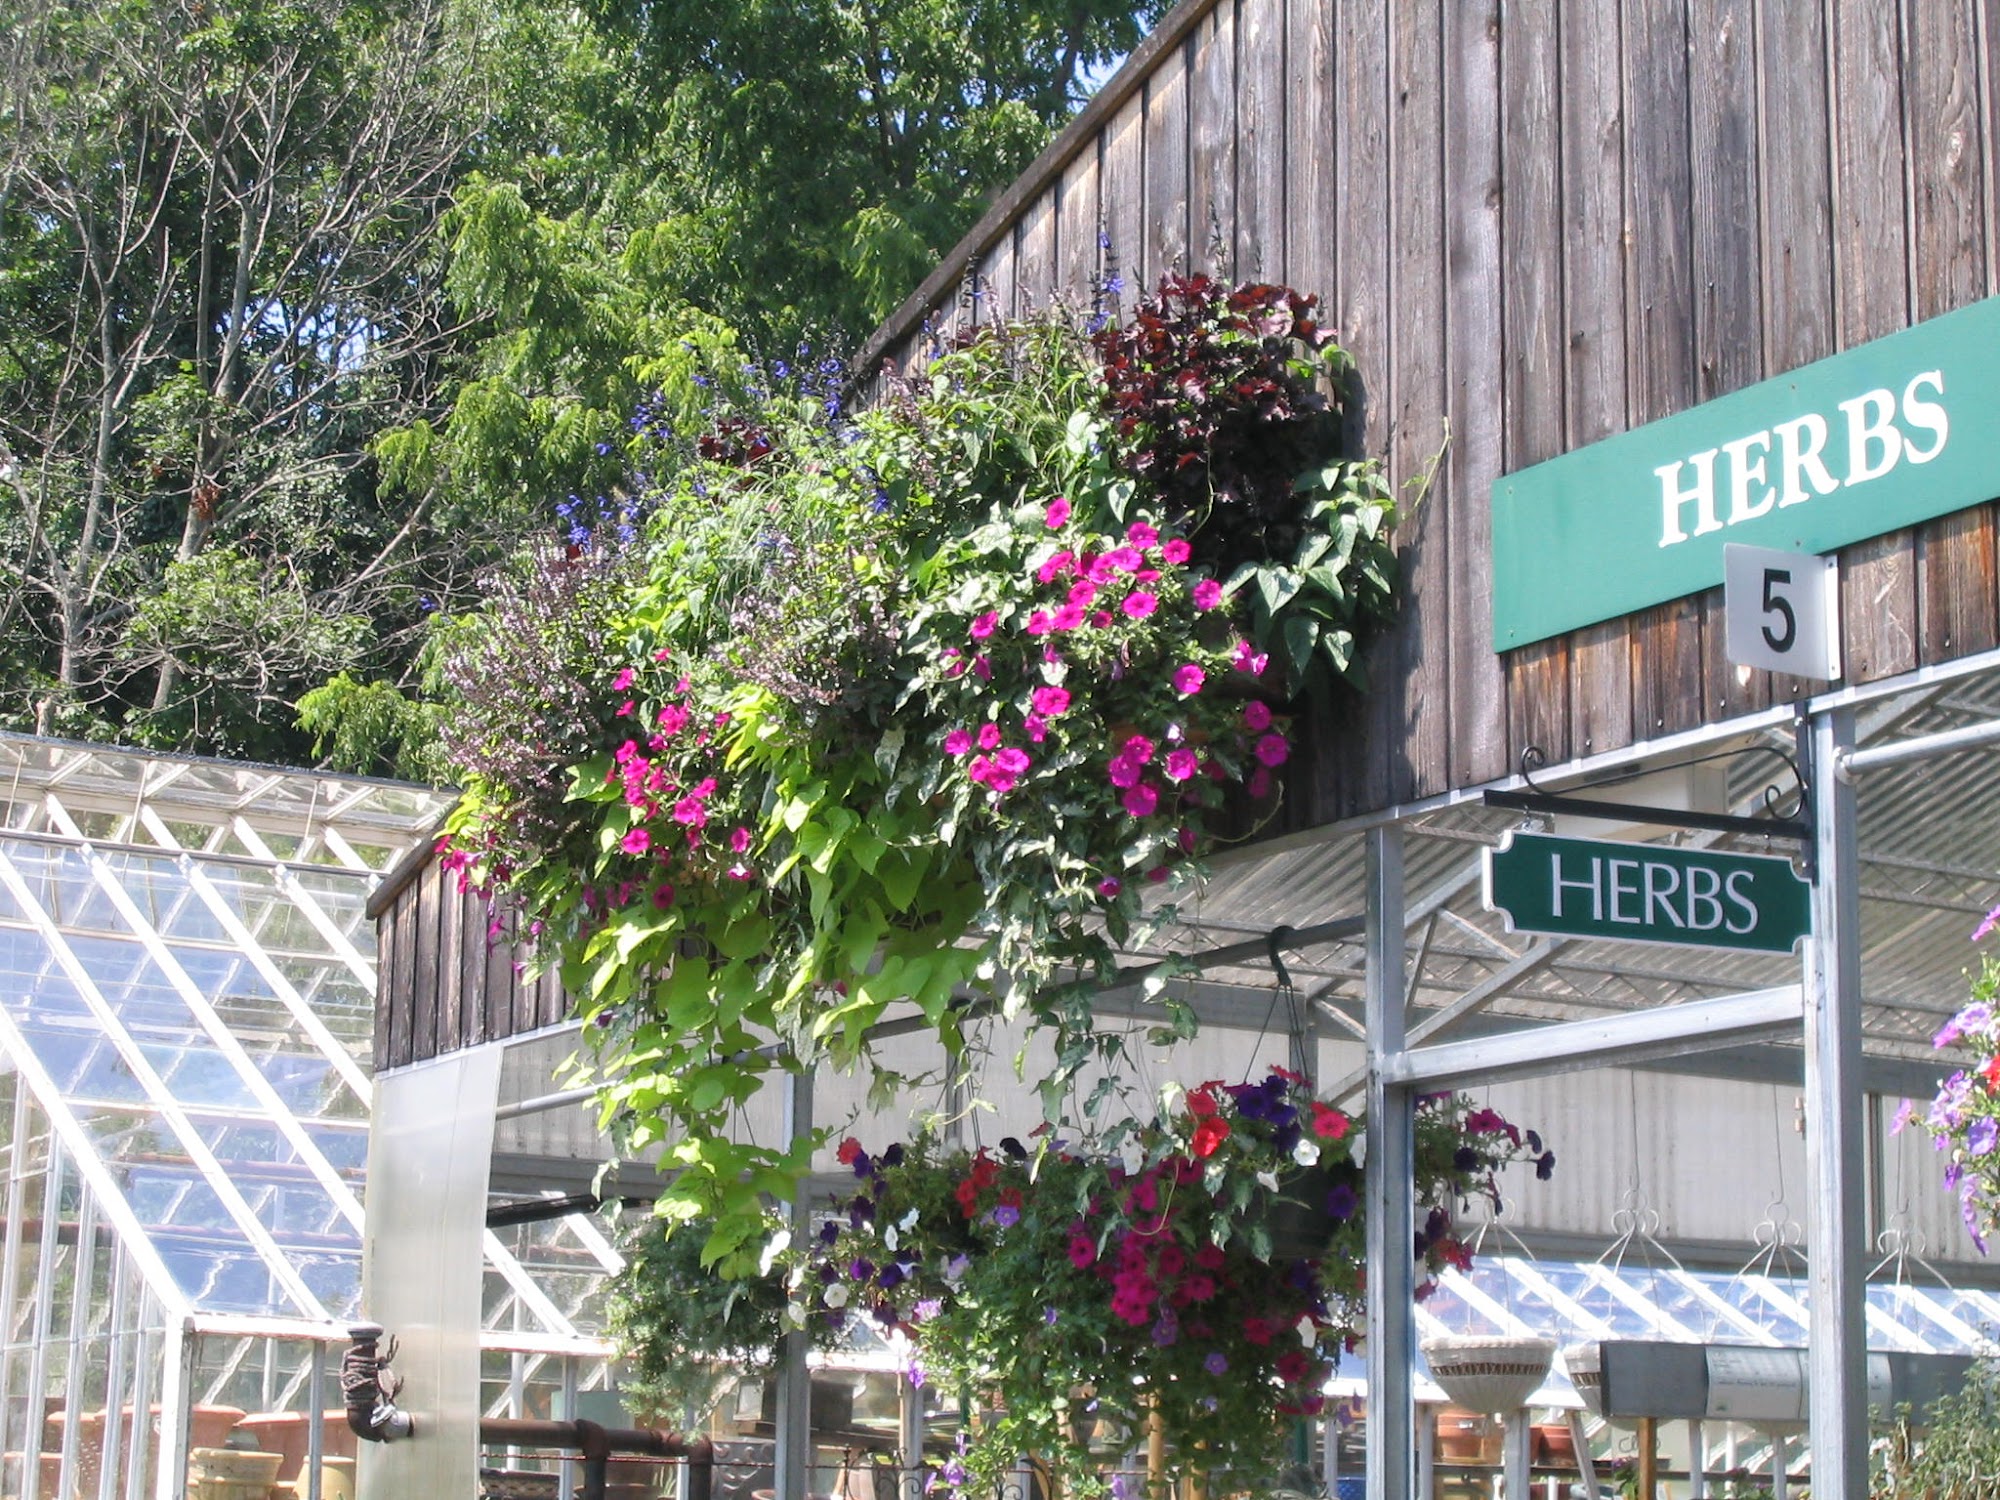 Gilbertie's Herbs and Garden Center